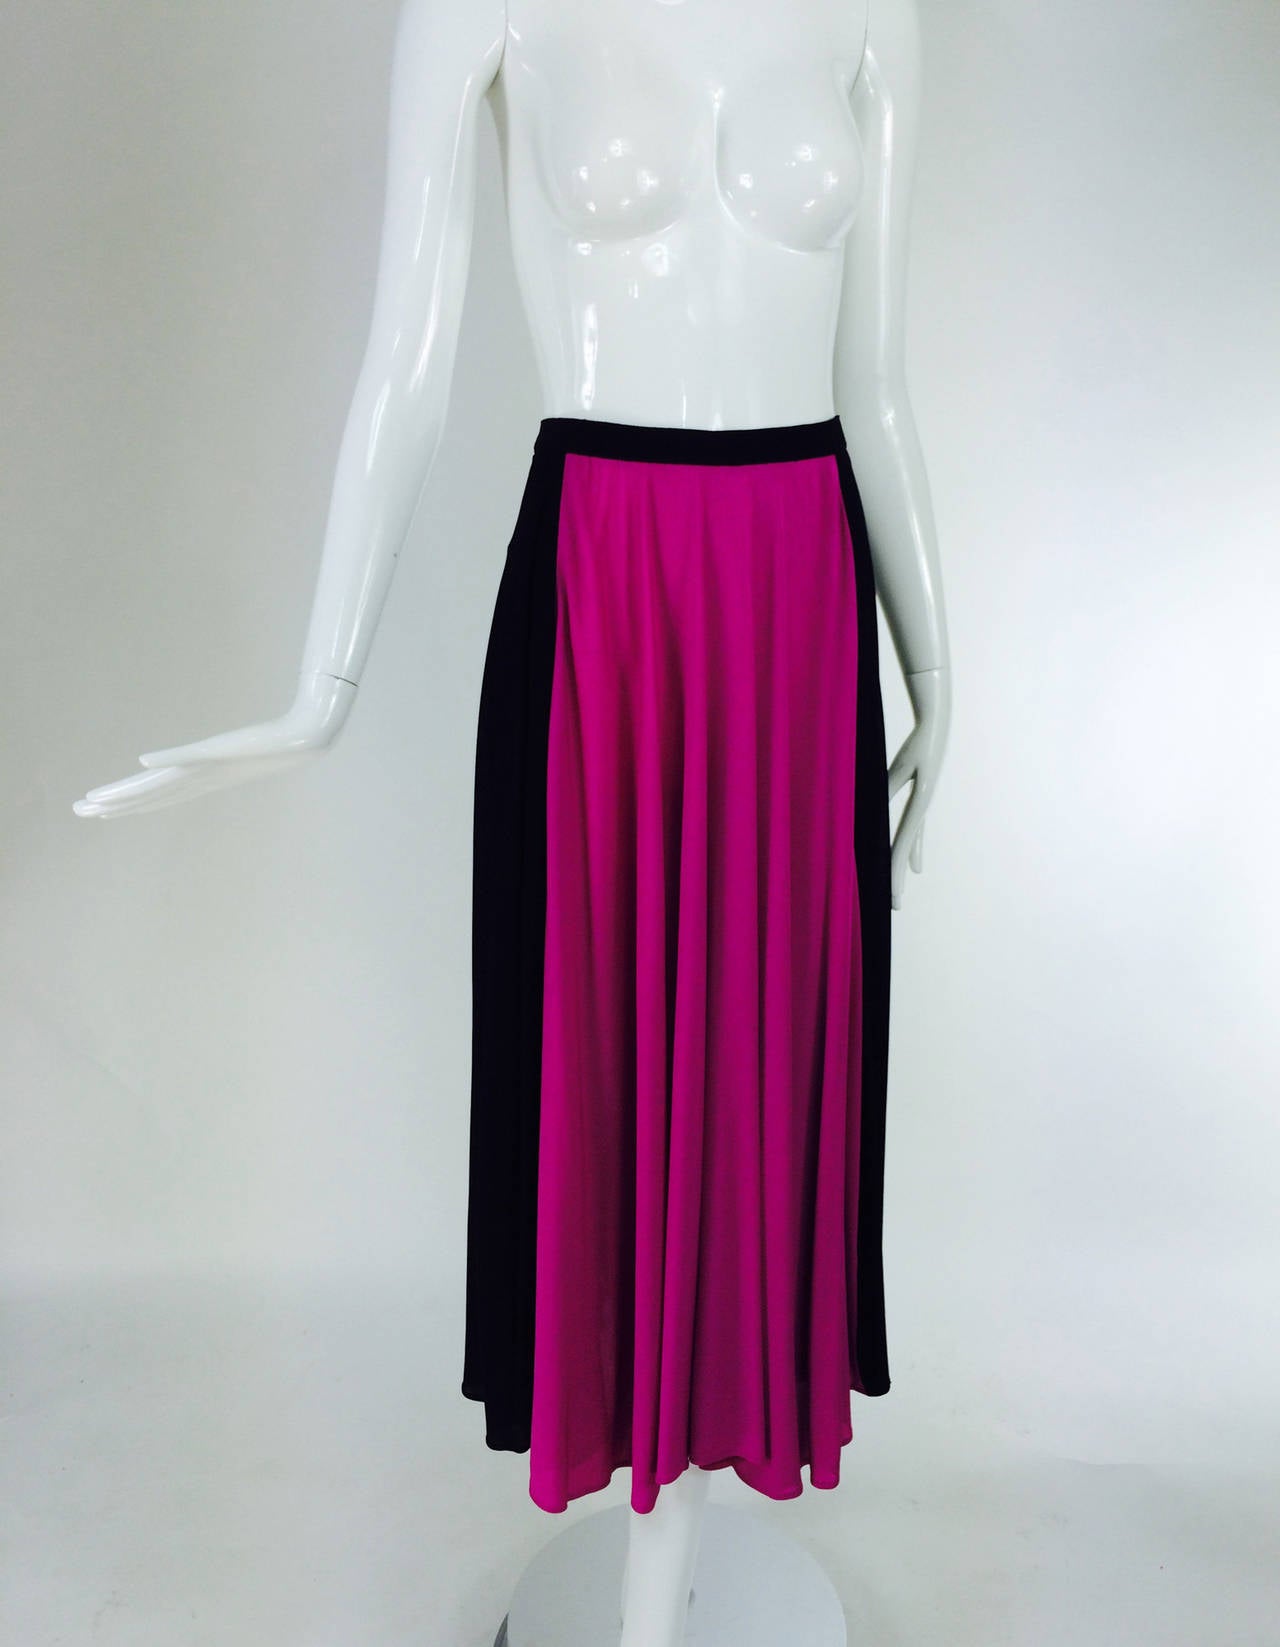 Yves St Laurent YSL  Rive Gauche black & hot pink jersey skirt 1970s 2